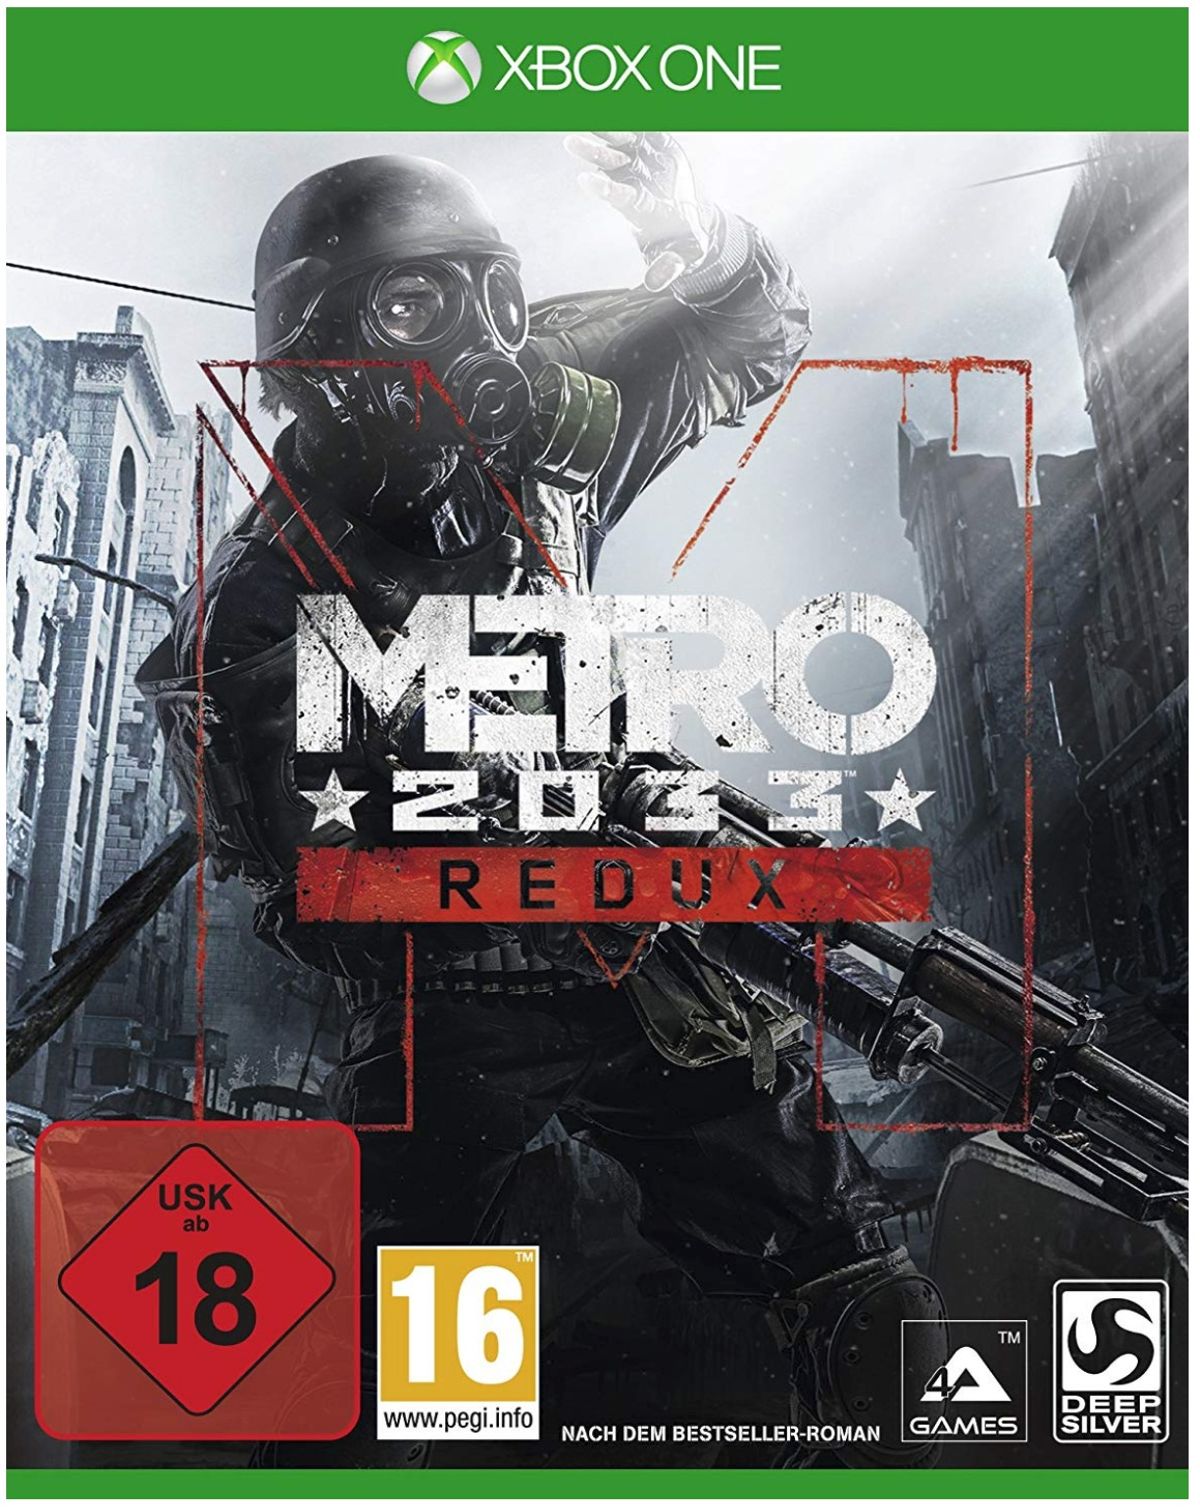 Купить Metro 2033 REDUX аренда для Xbox One ✔️ по низкой
                                                     цене